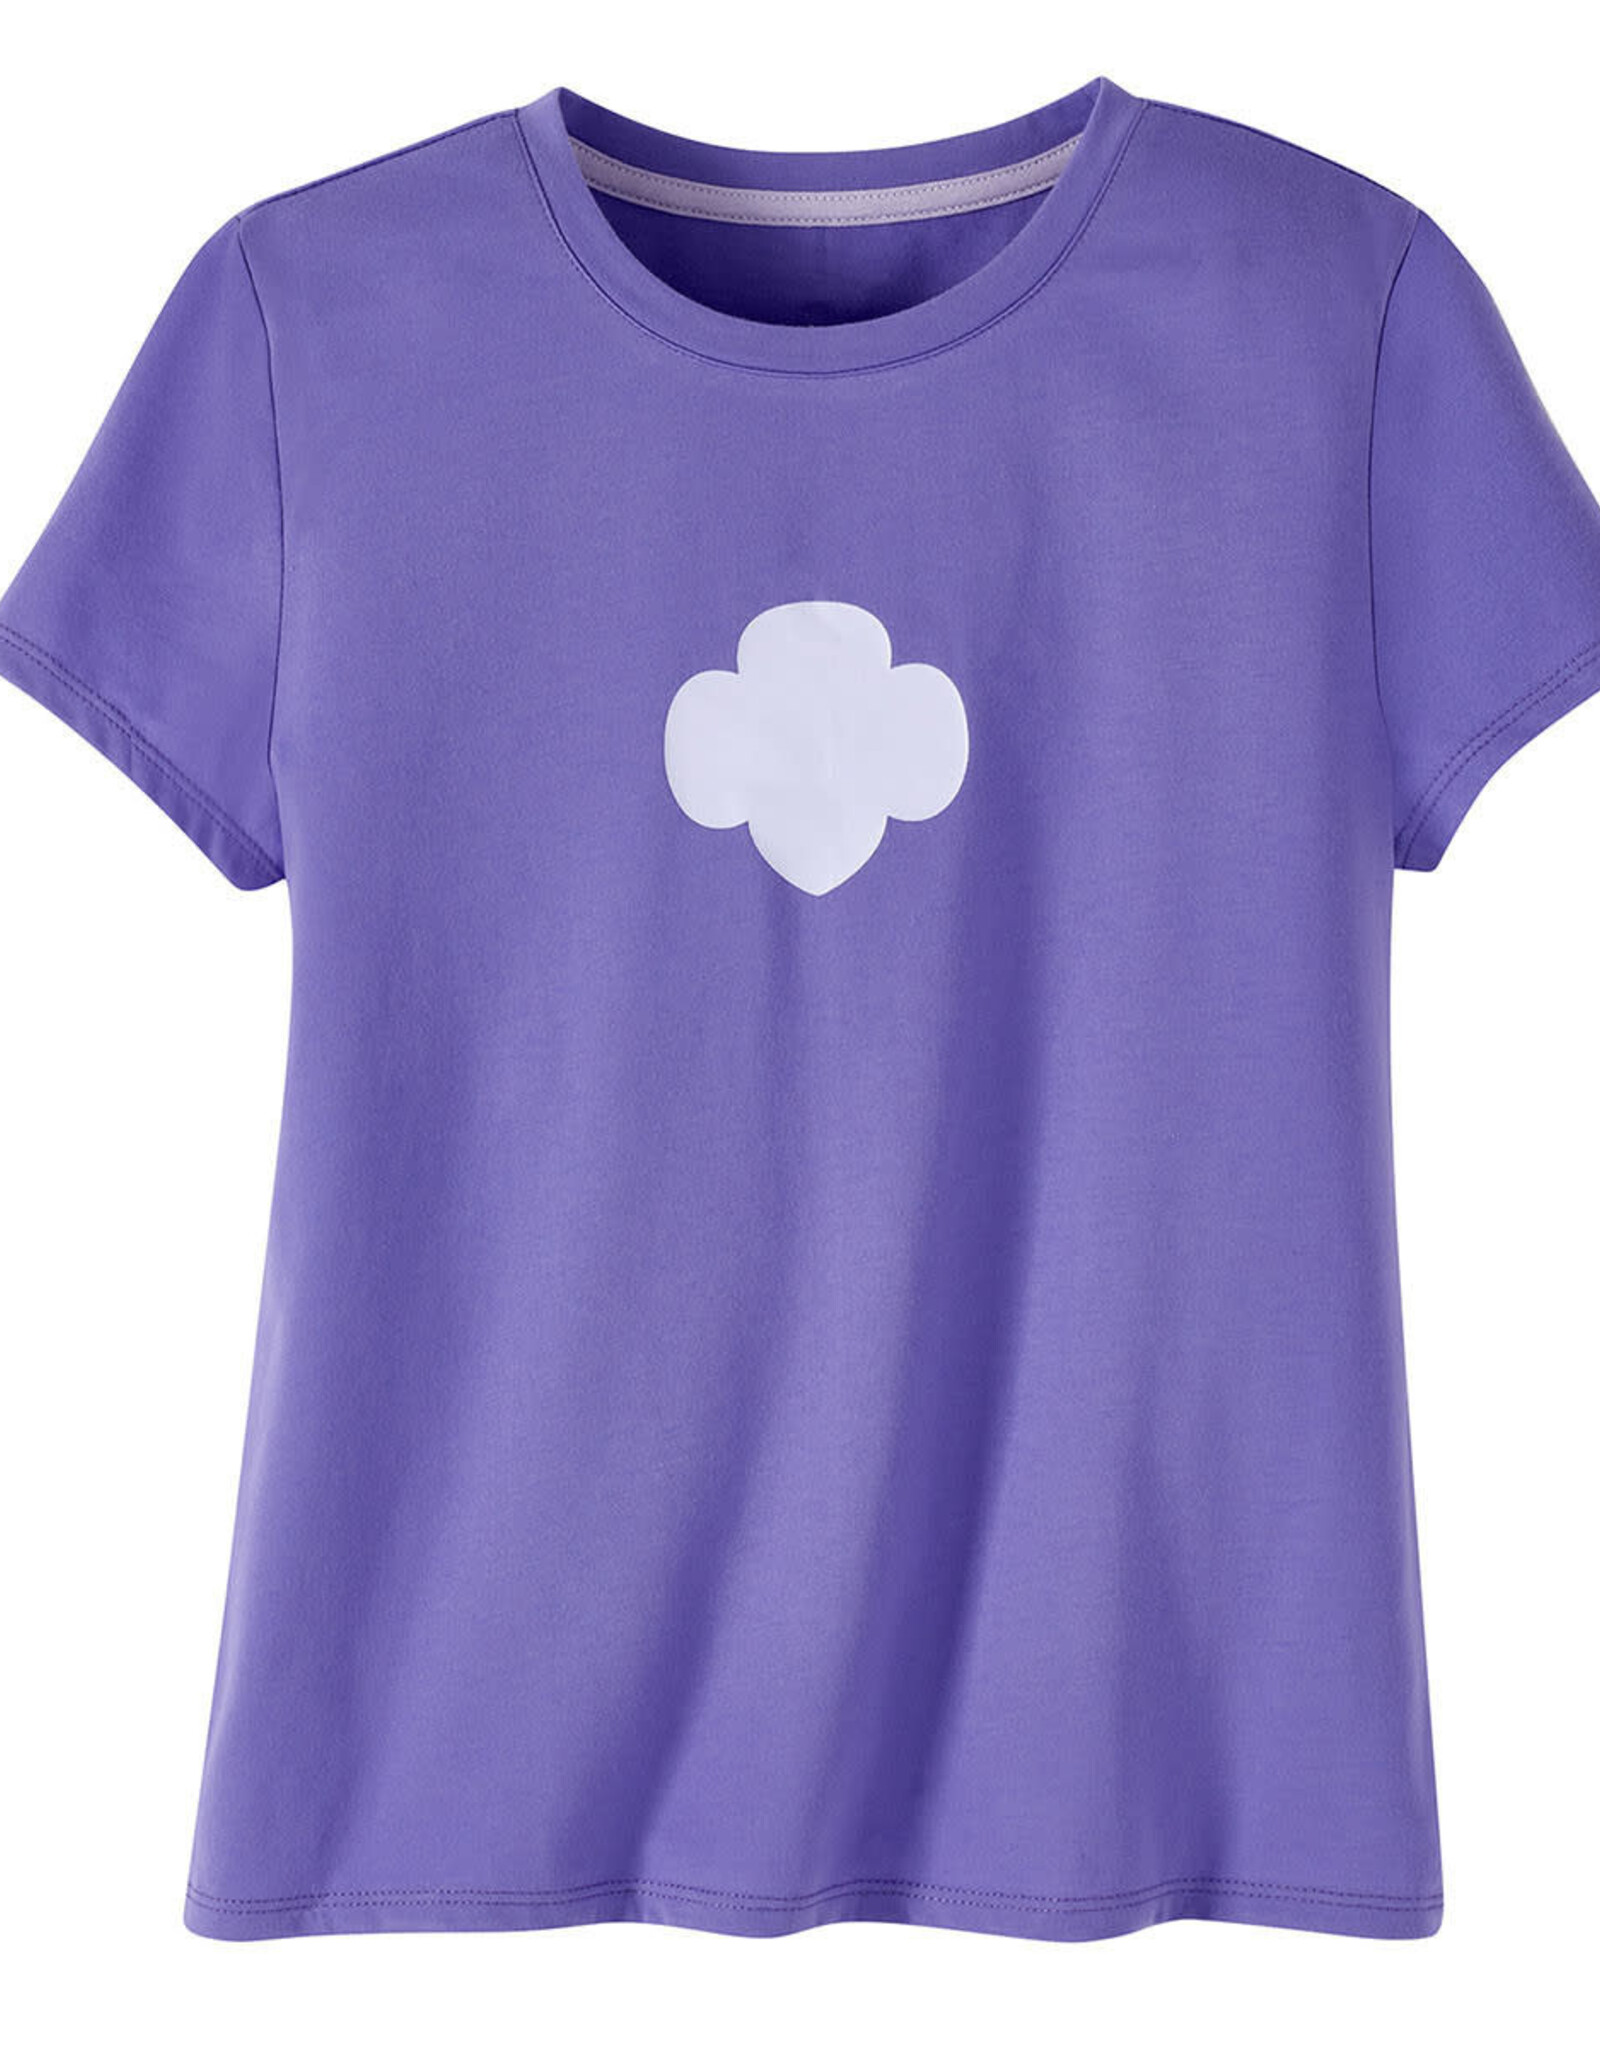 GSUSA Girls Purple Trefoil T-shirt